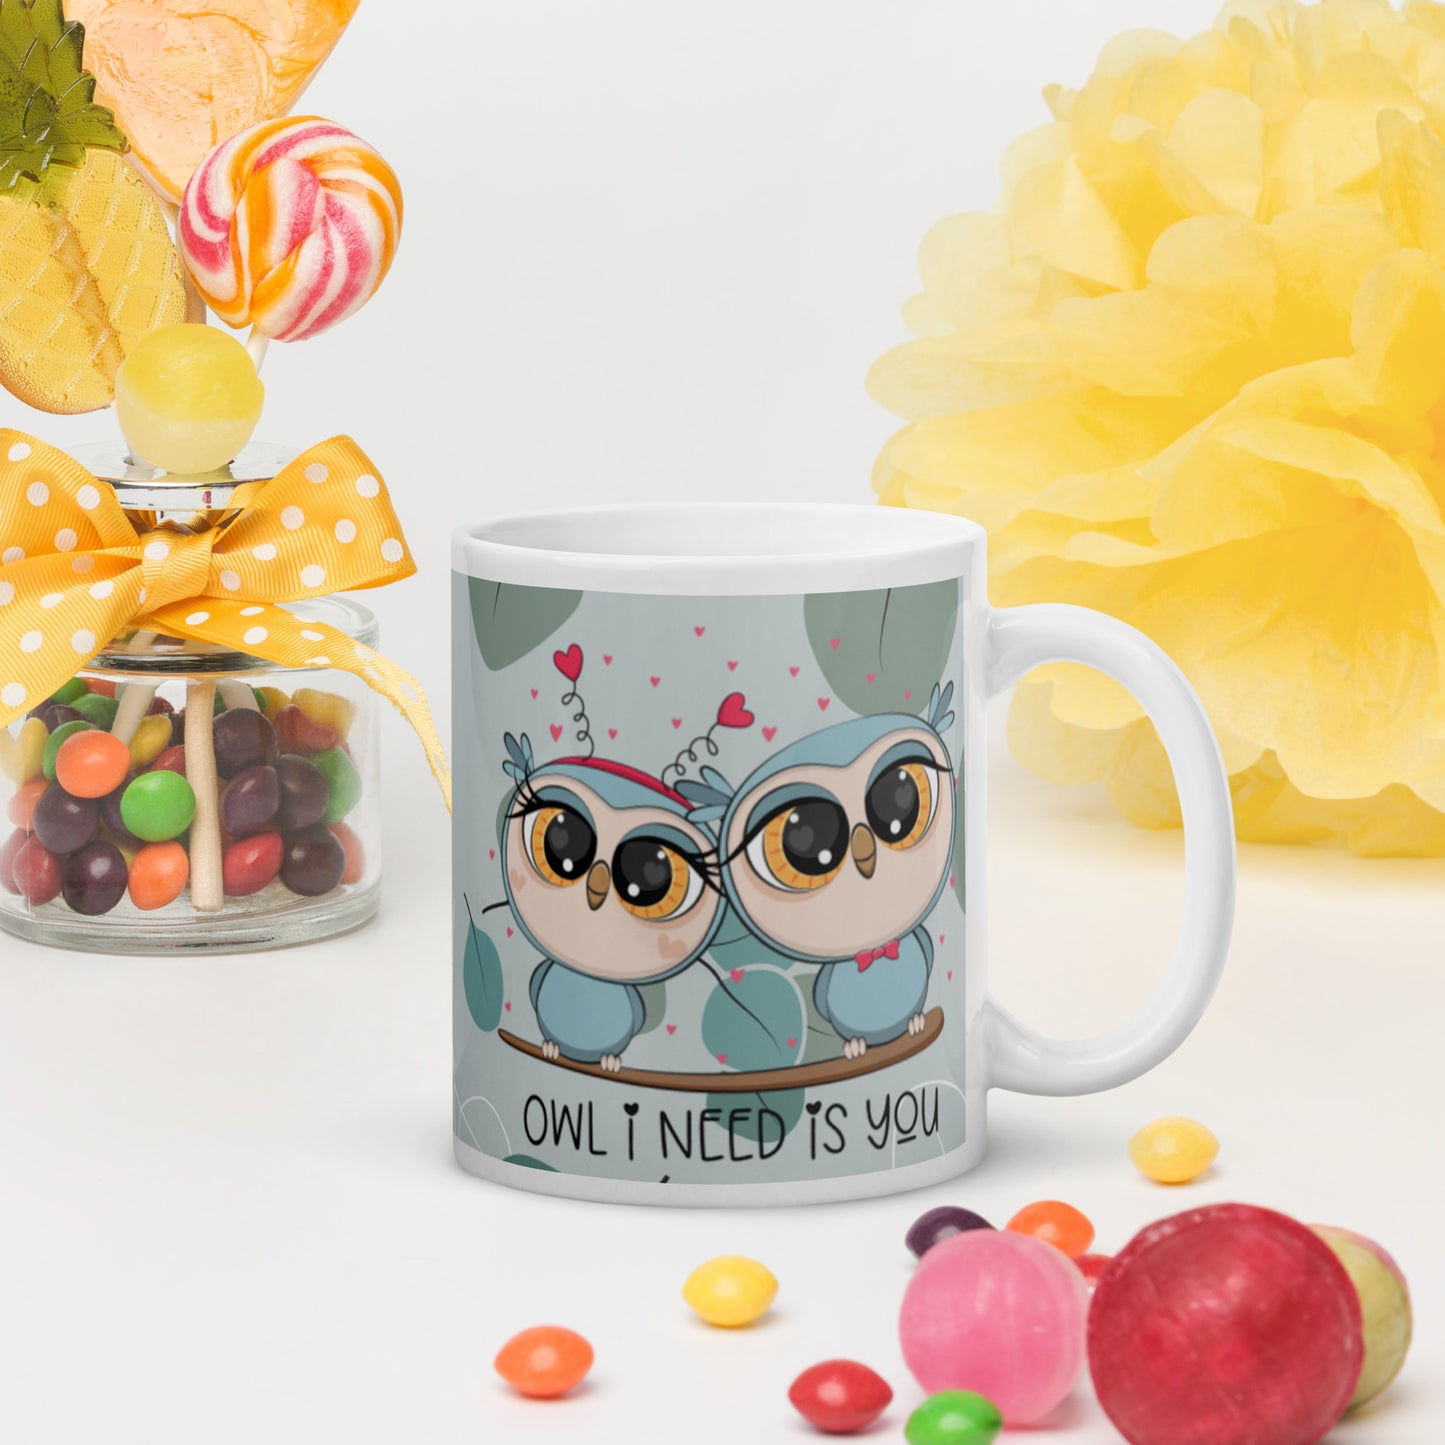 OWL I NEED IS YOU- White glossy mug